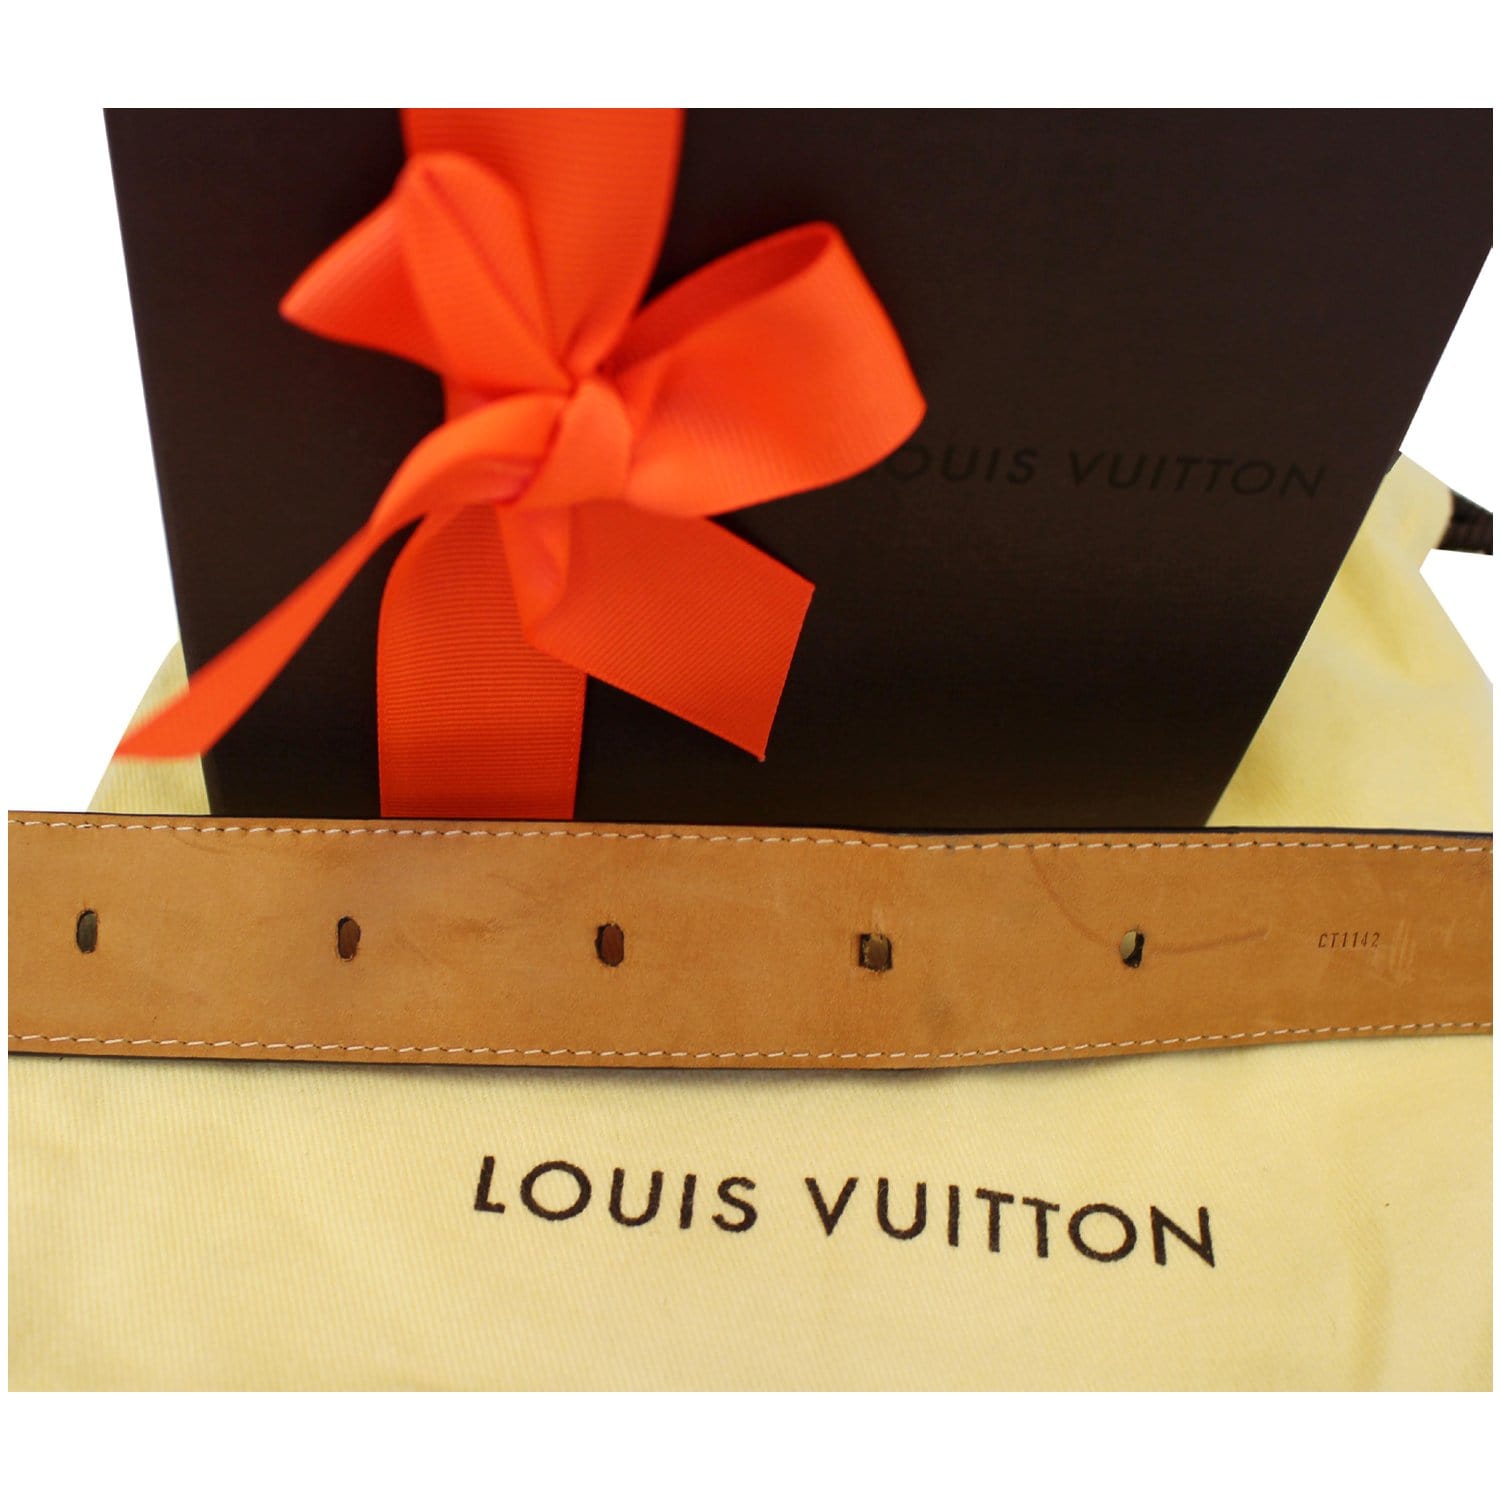 Louis Vuitton Gift Box and LV Ribbon